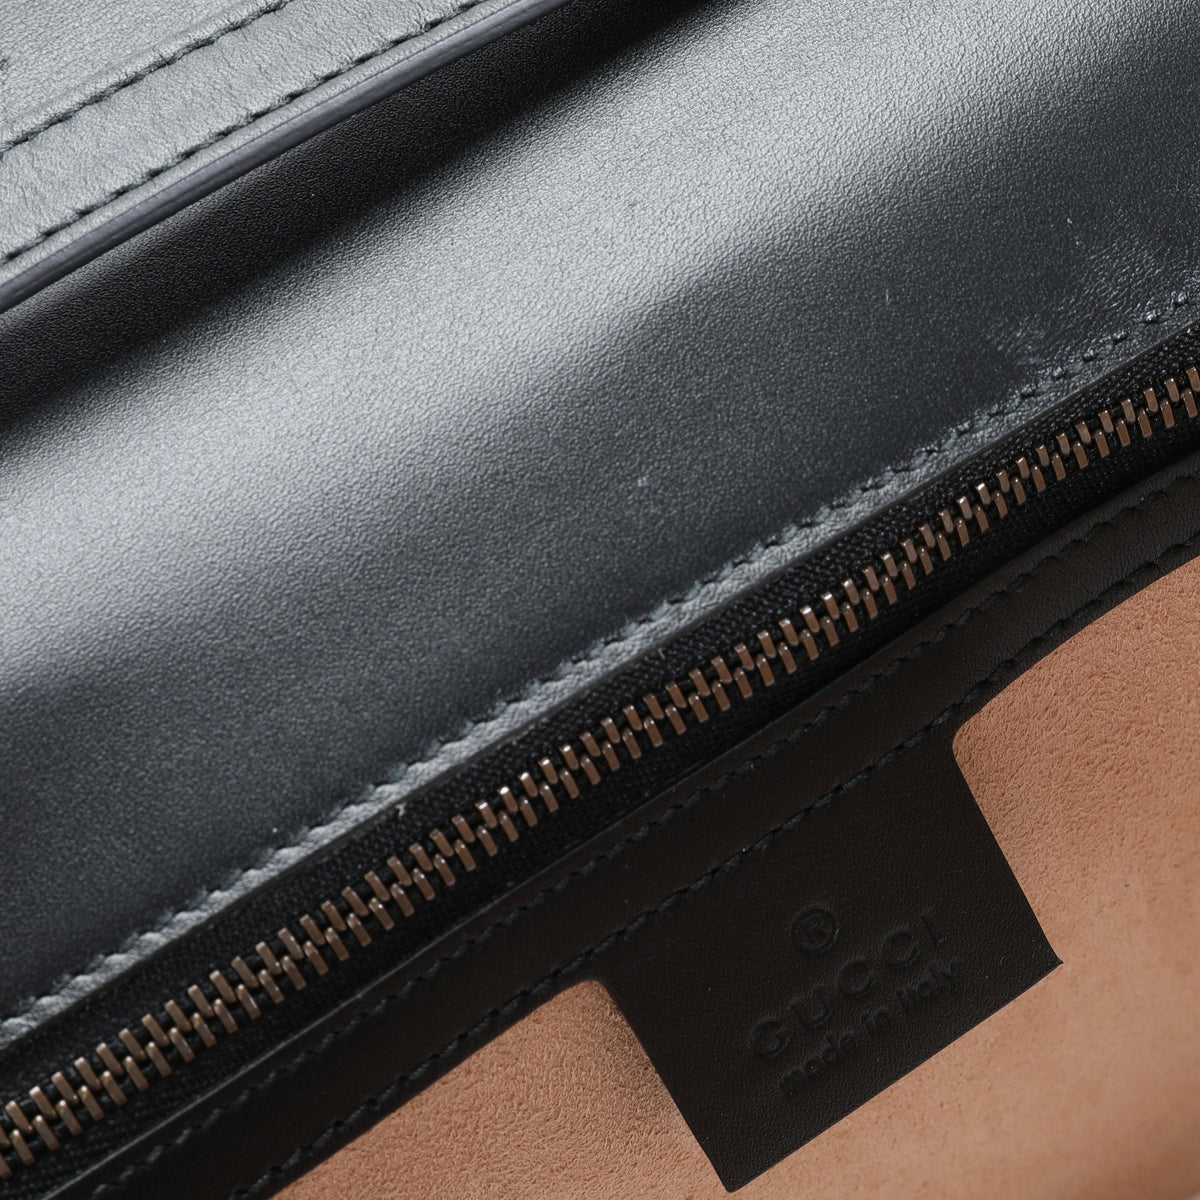 Louis Vuitton Iconic Monogram Speedy Bag Charm, myGemma, SG